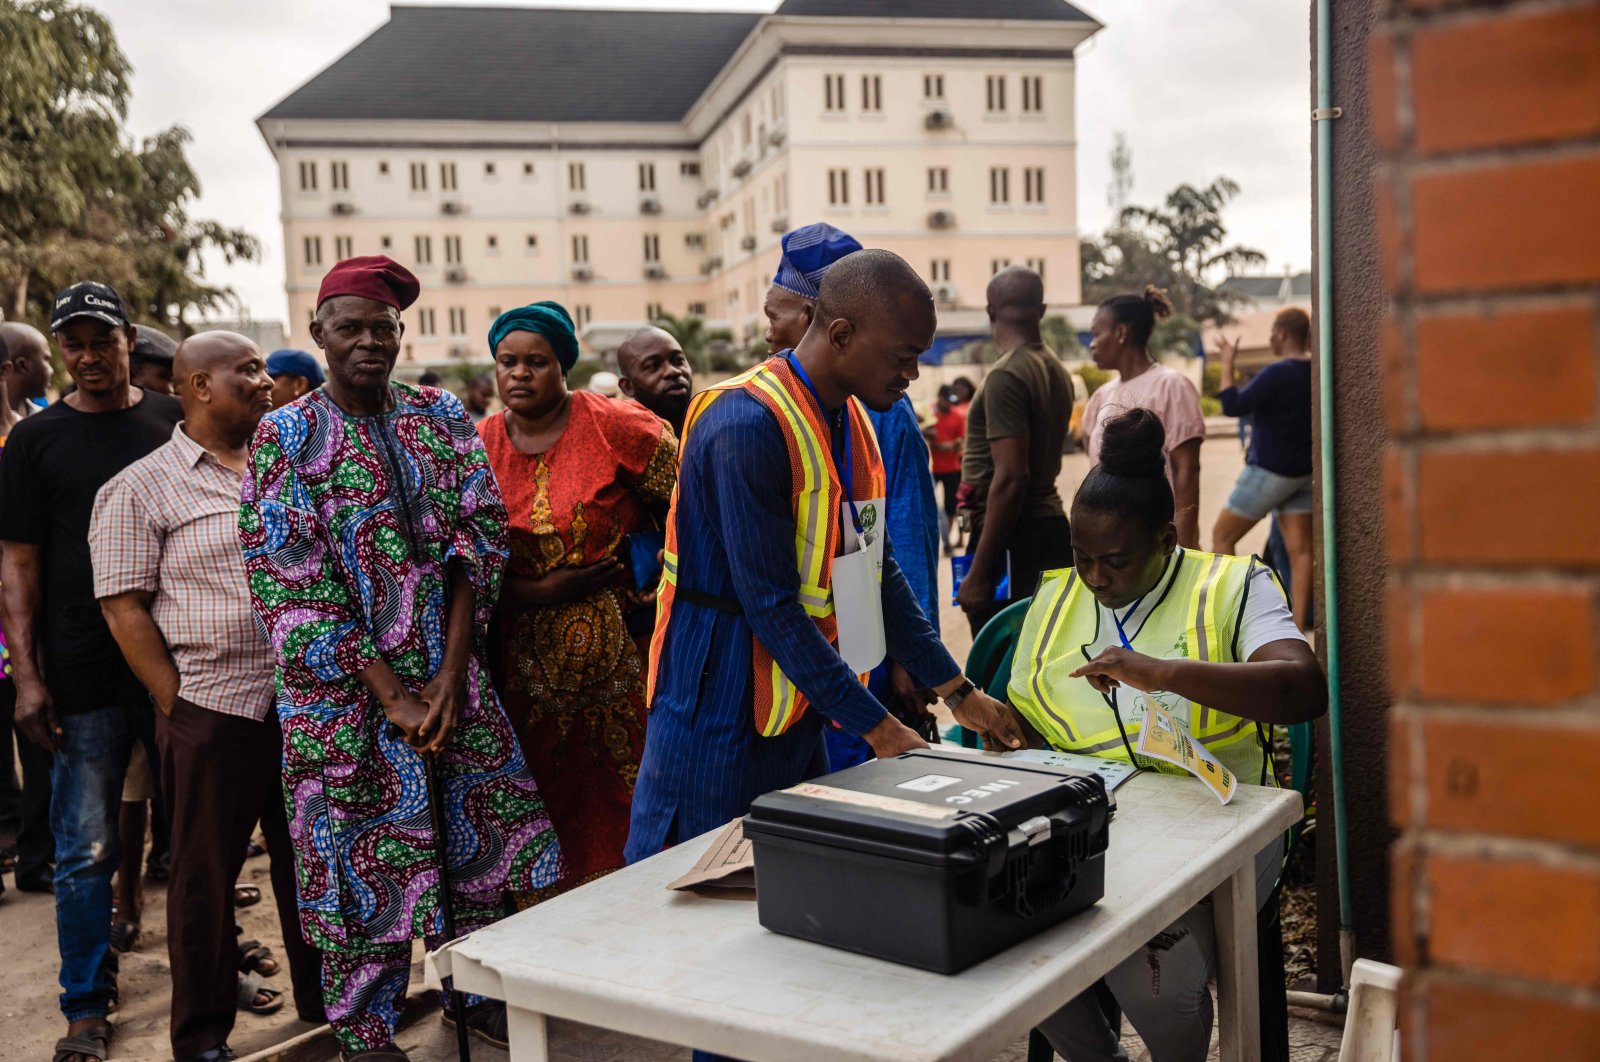 Nigeria menghitung suara untuk memilih presiden baru dalam persaingan ketat